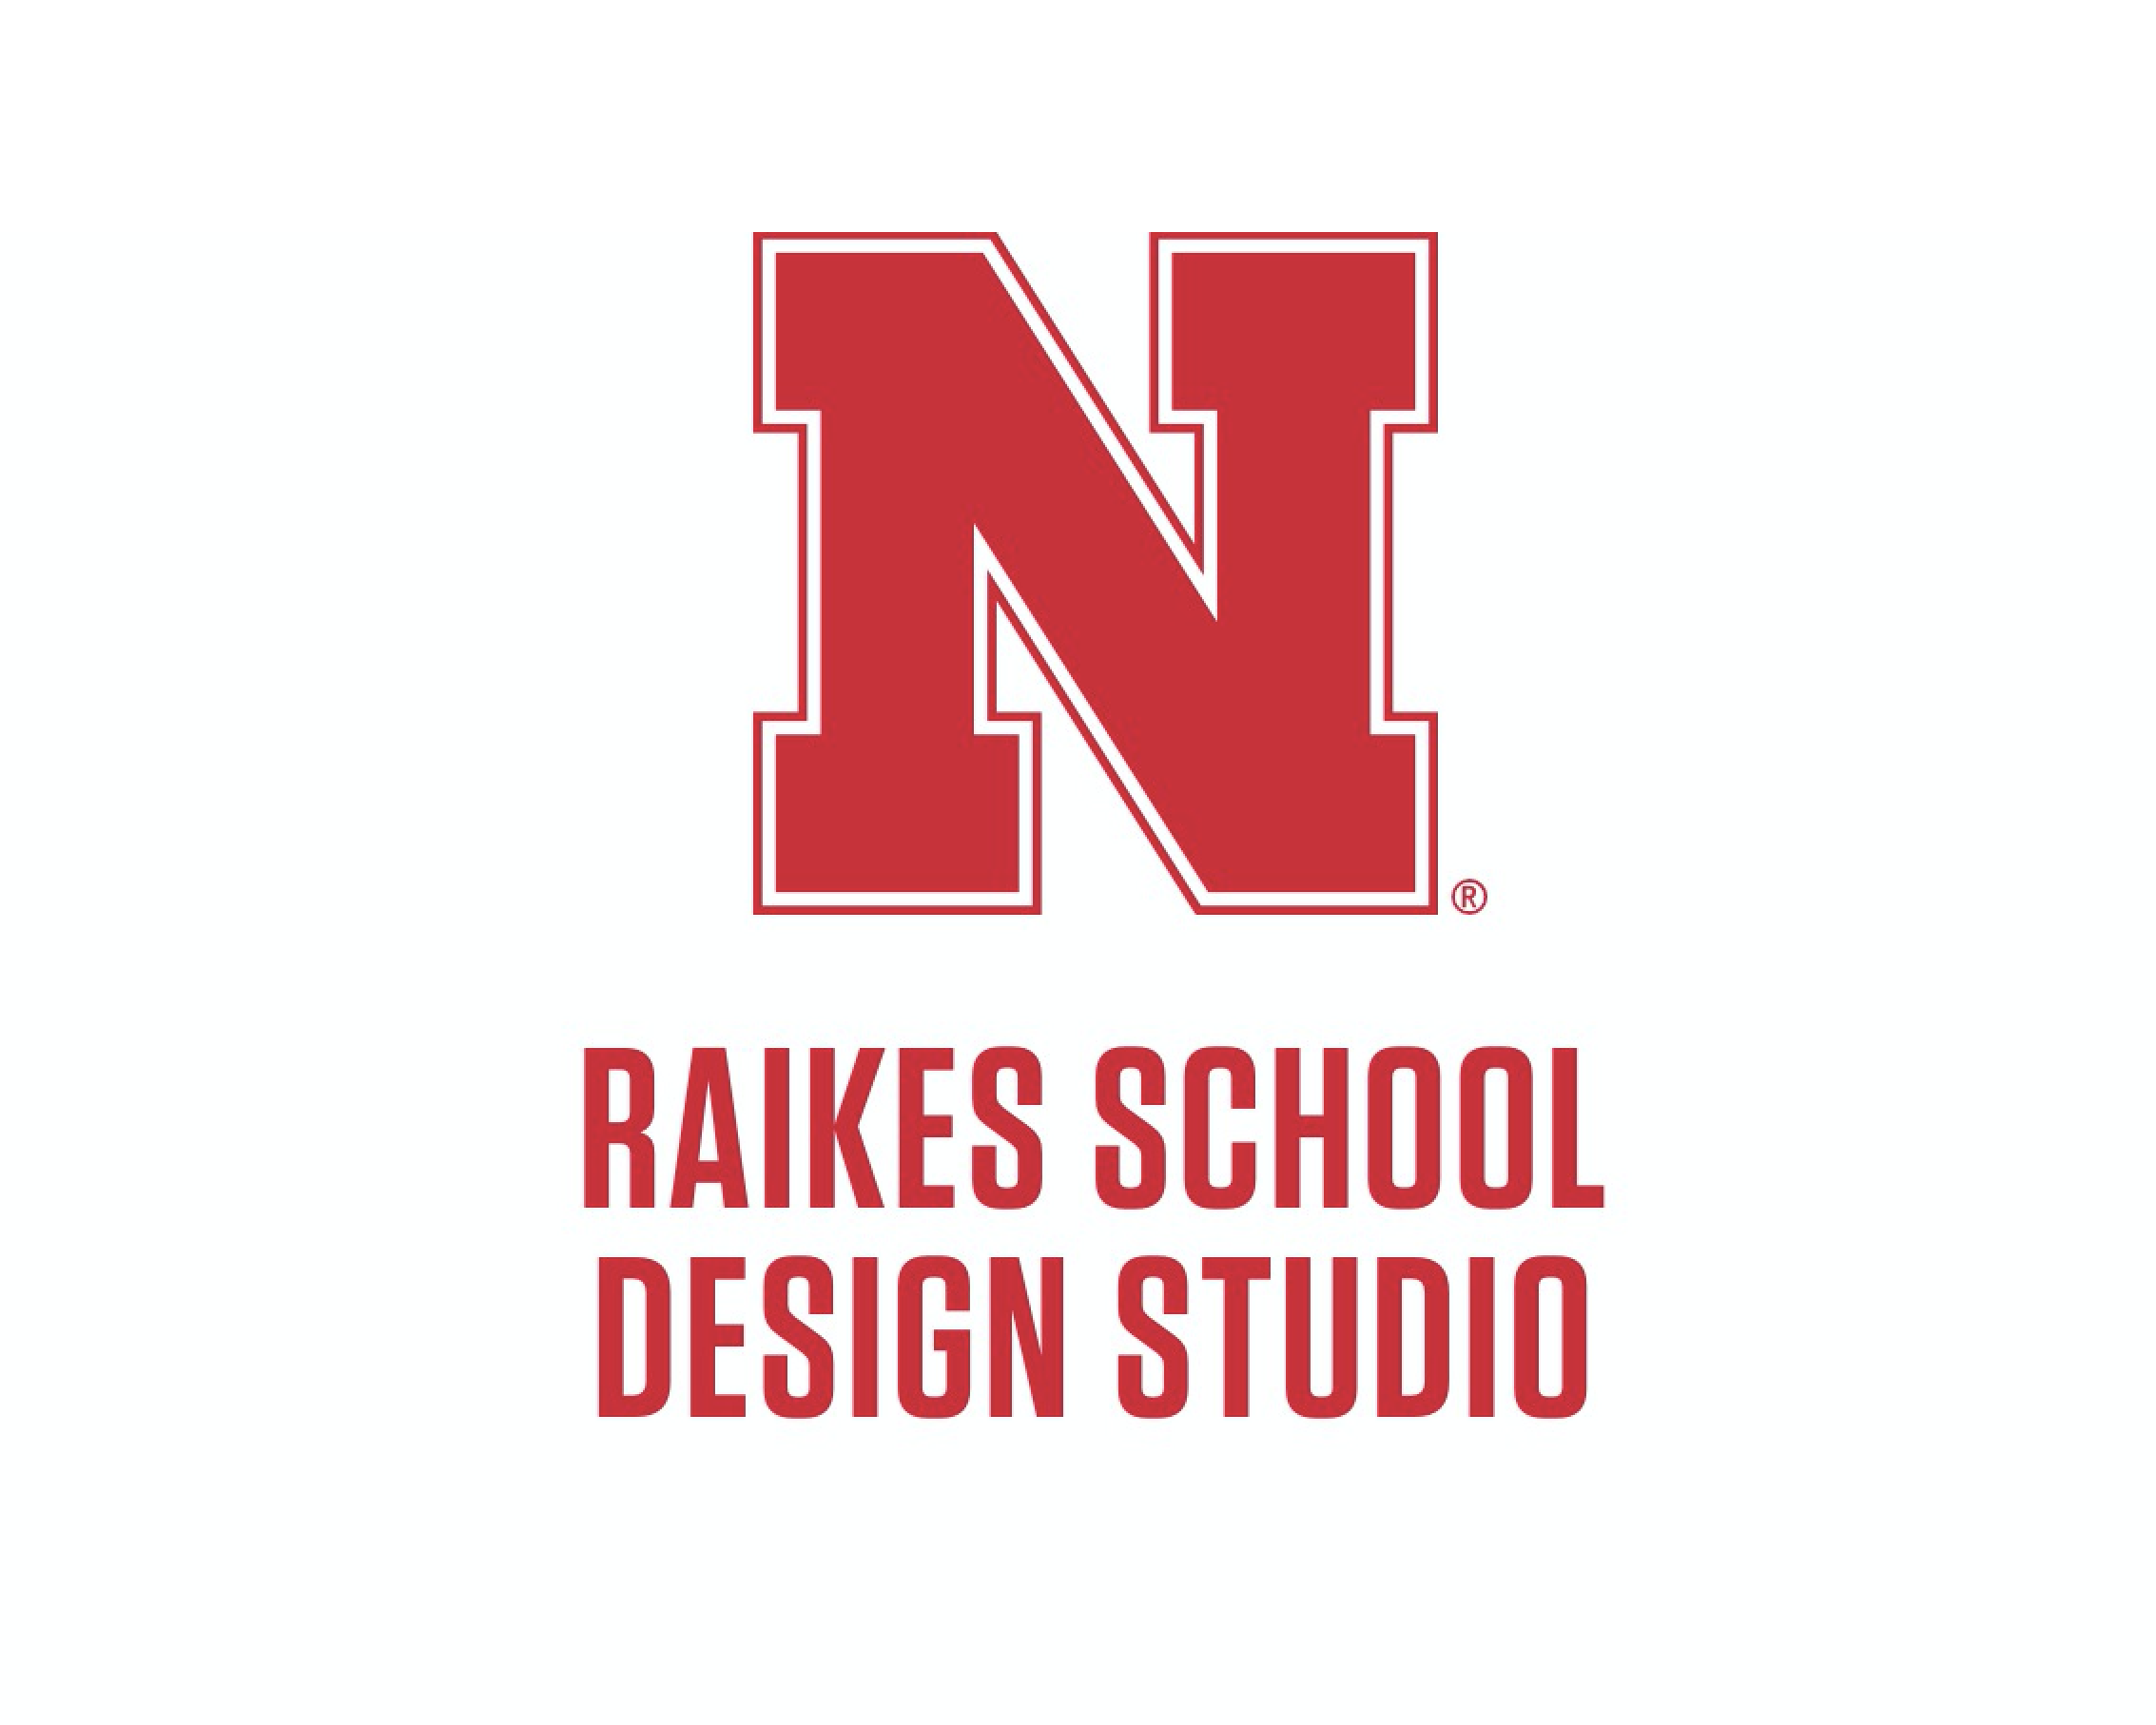 The Raikes School Design Studio